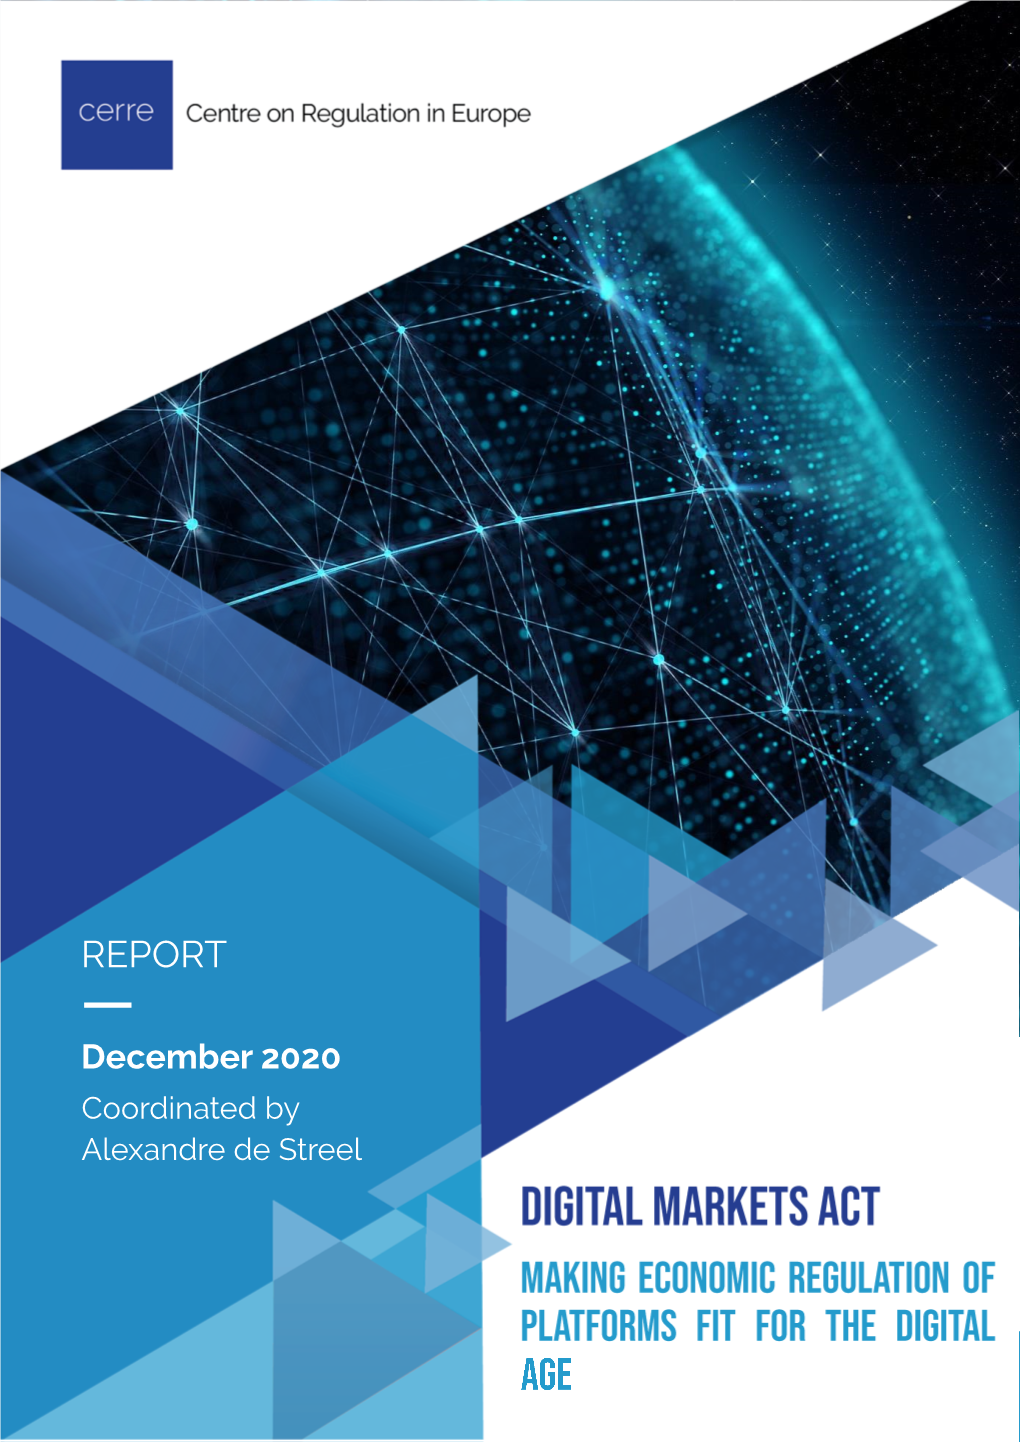 Digital Markets Act: Making Economic Regulation of Platforms Fit for the Digital Age